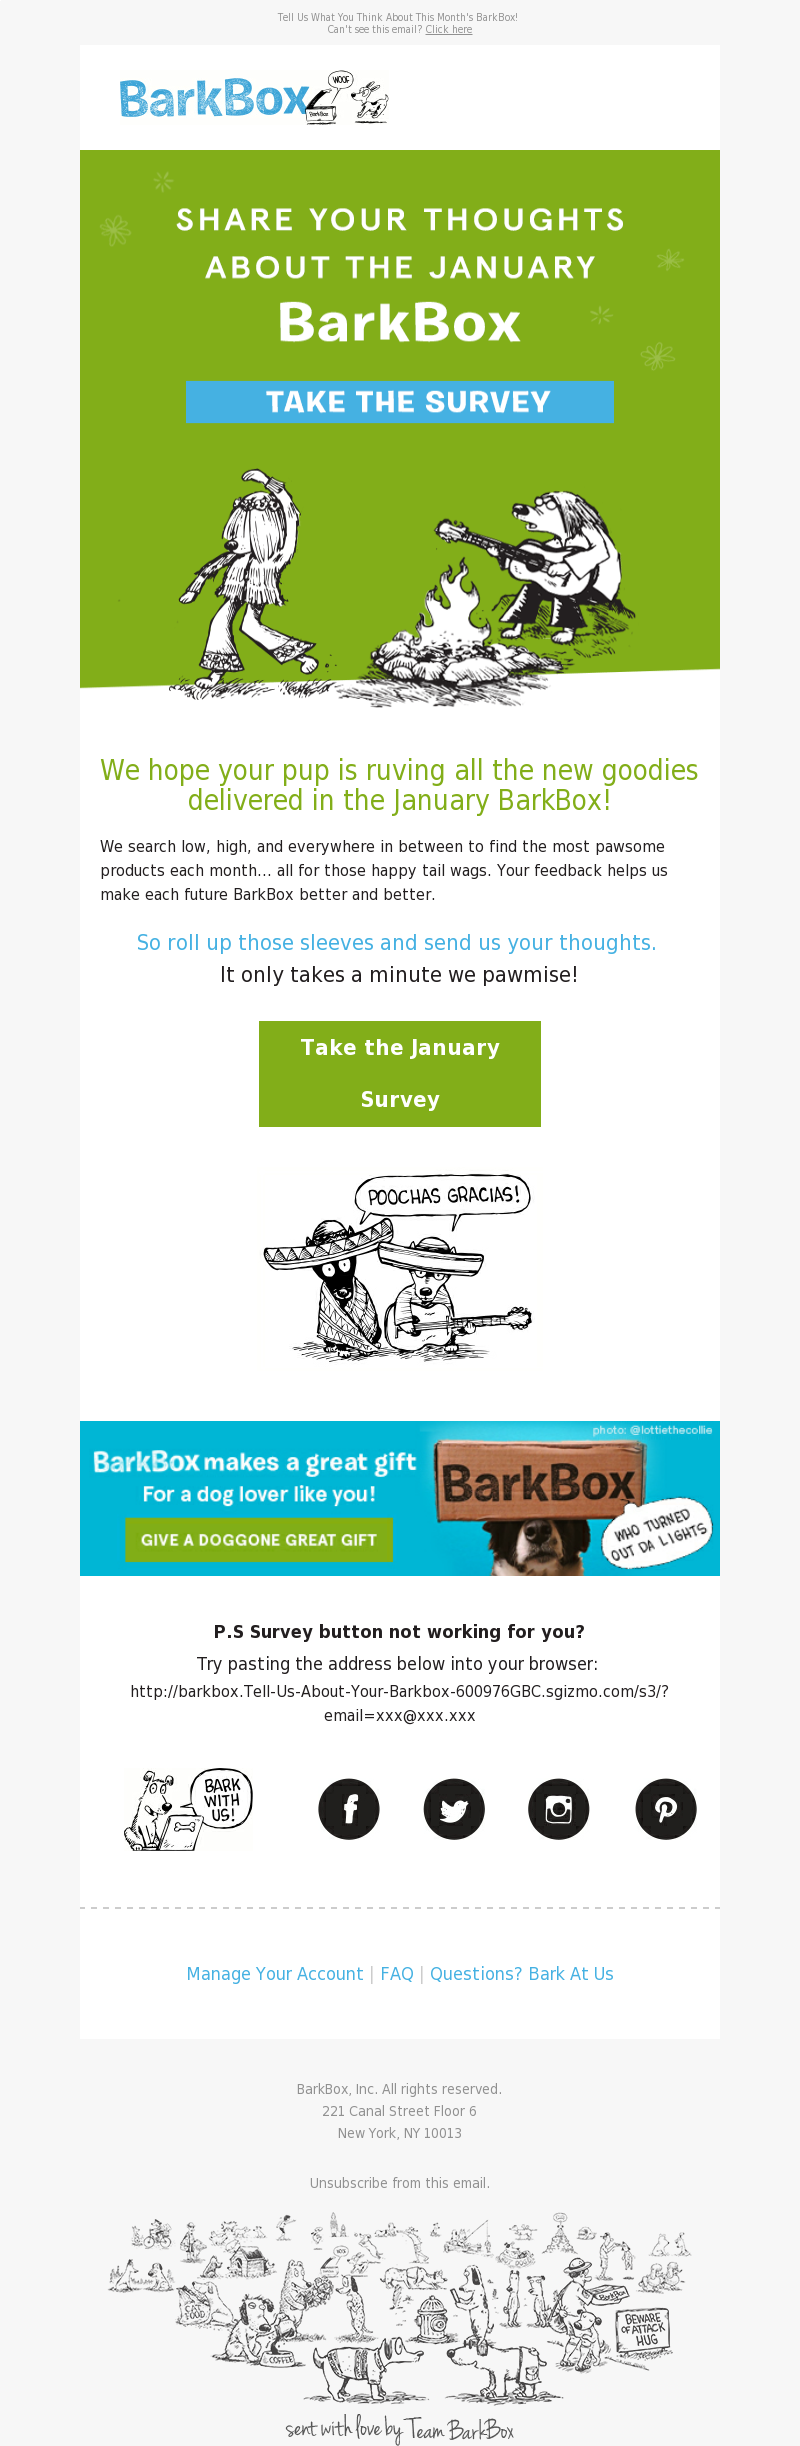 BarkBox - Did you enjoy the January BarkBox?